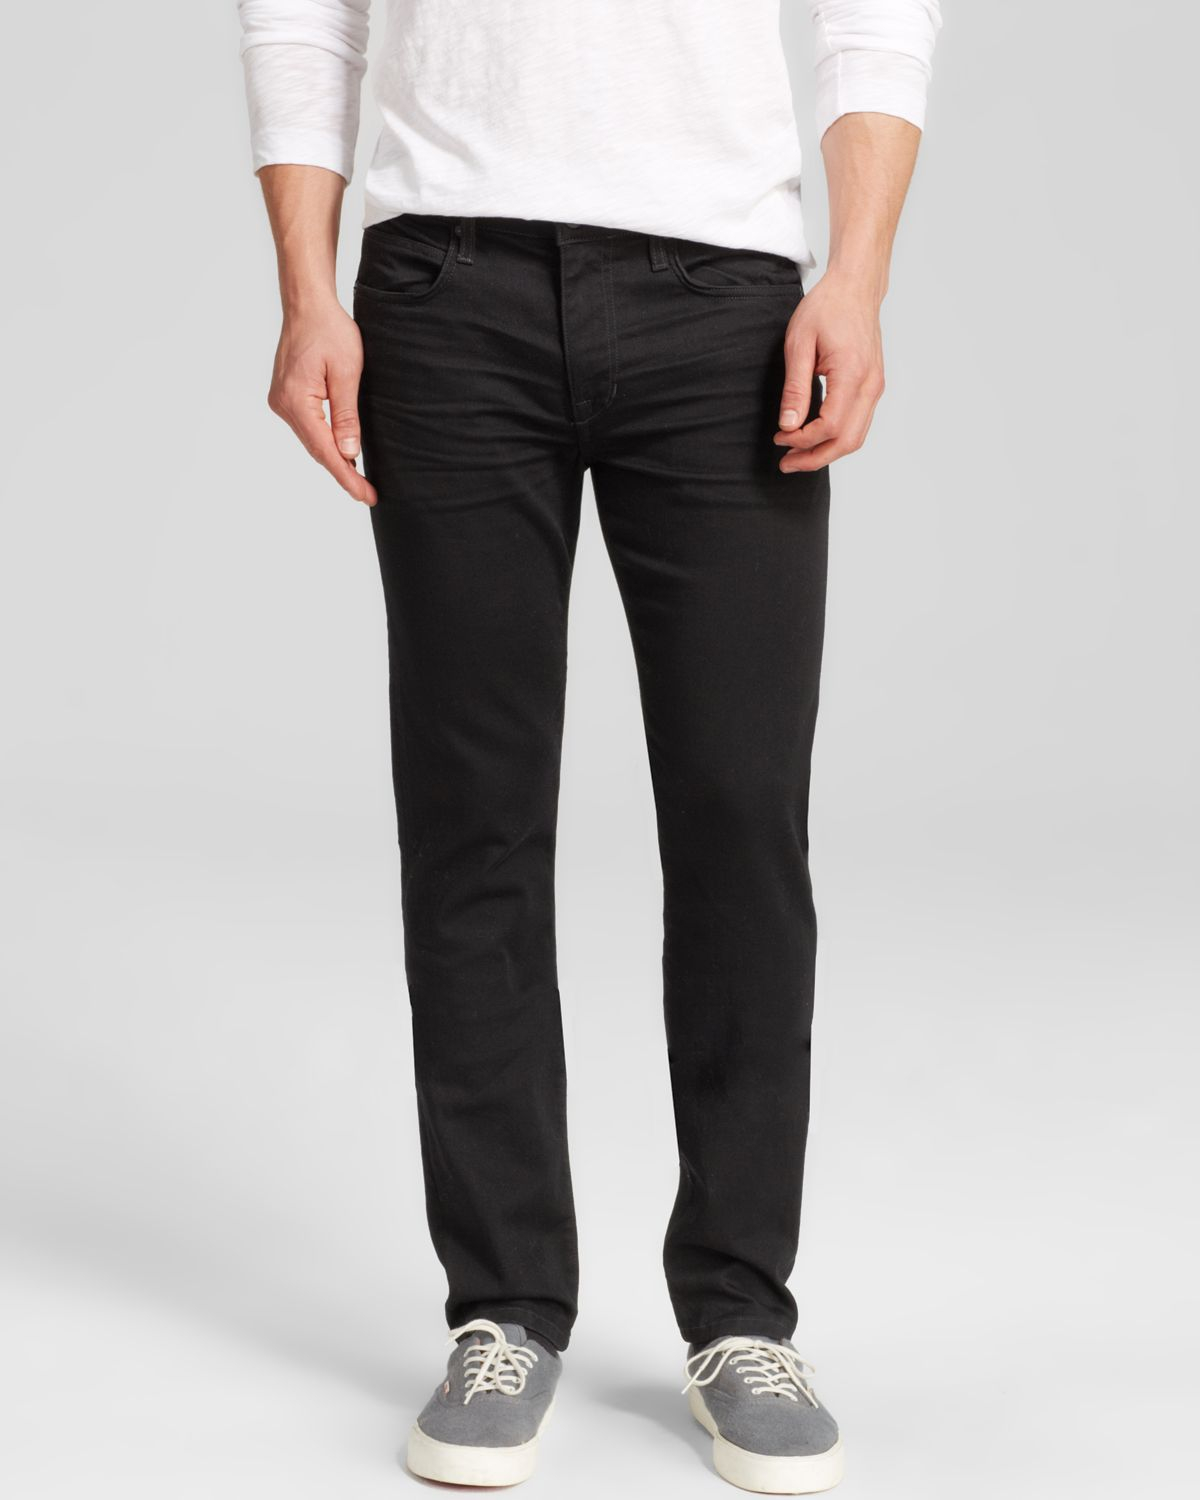 Lyst - Joe'S Jeans The Slim Fit in Black for Men